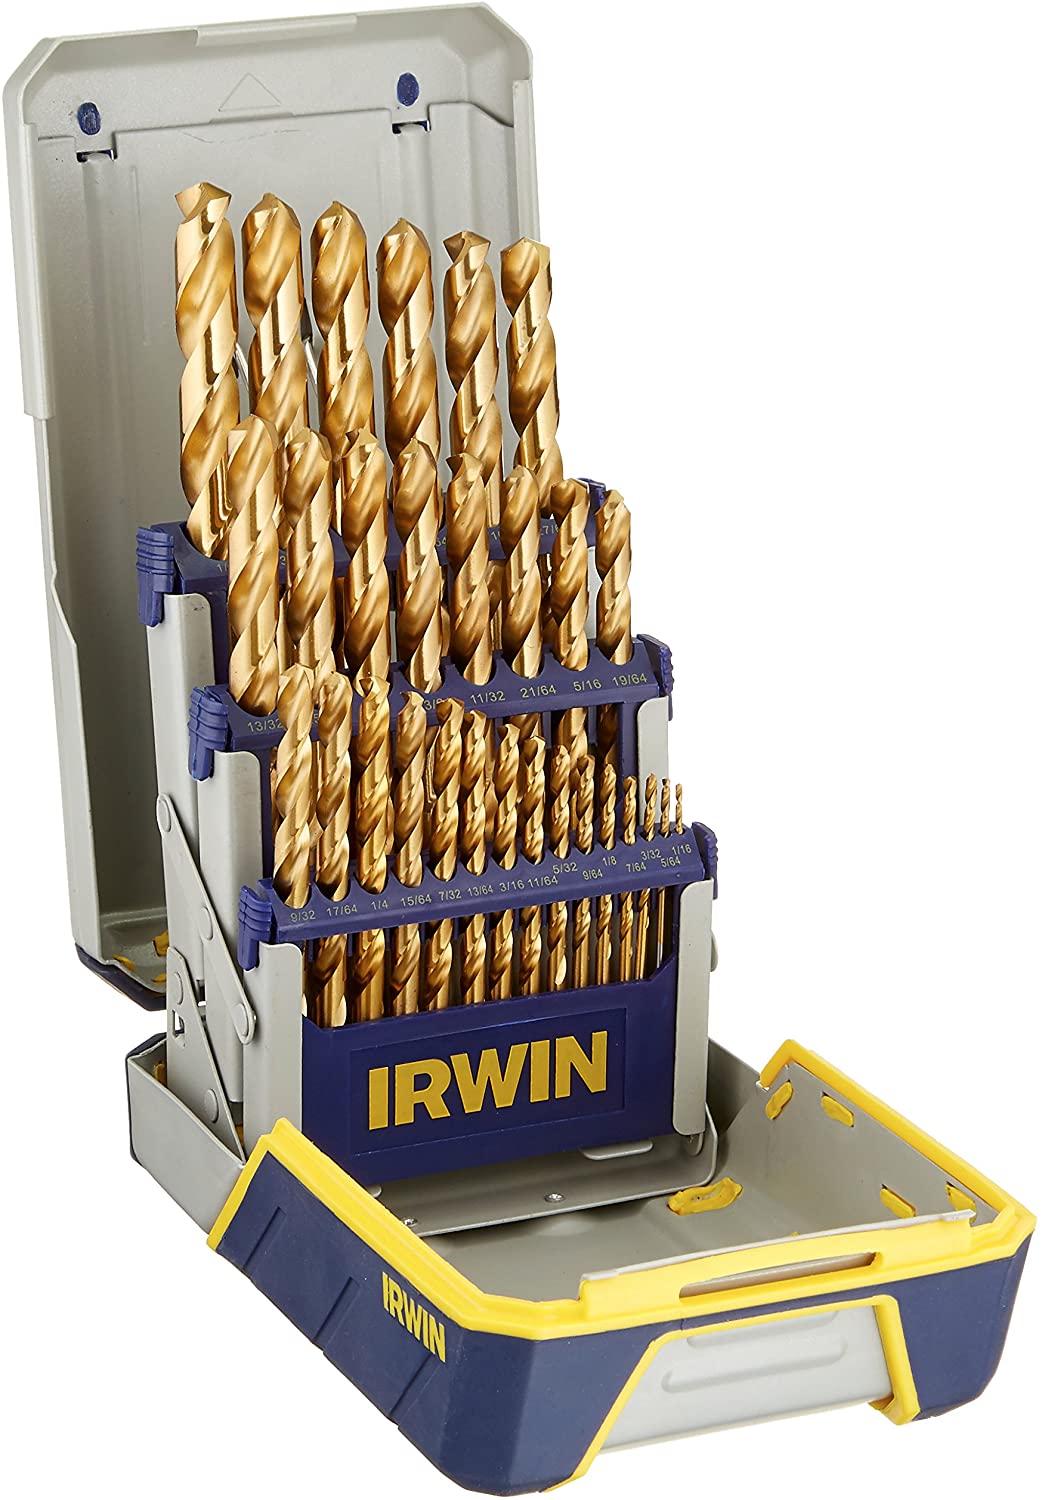 Irwin Titanium Metal Index Drill Bit Set - 29 Piece Shop Equipment - Cleanflow